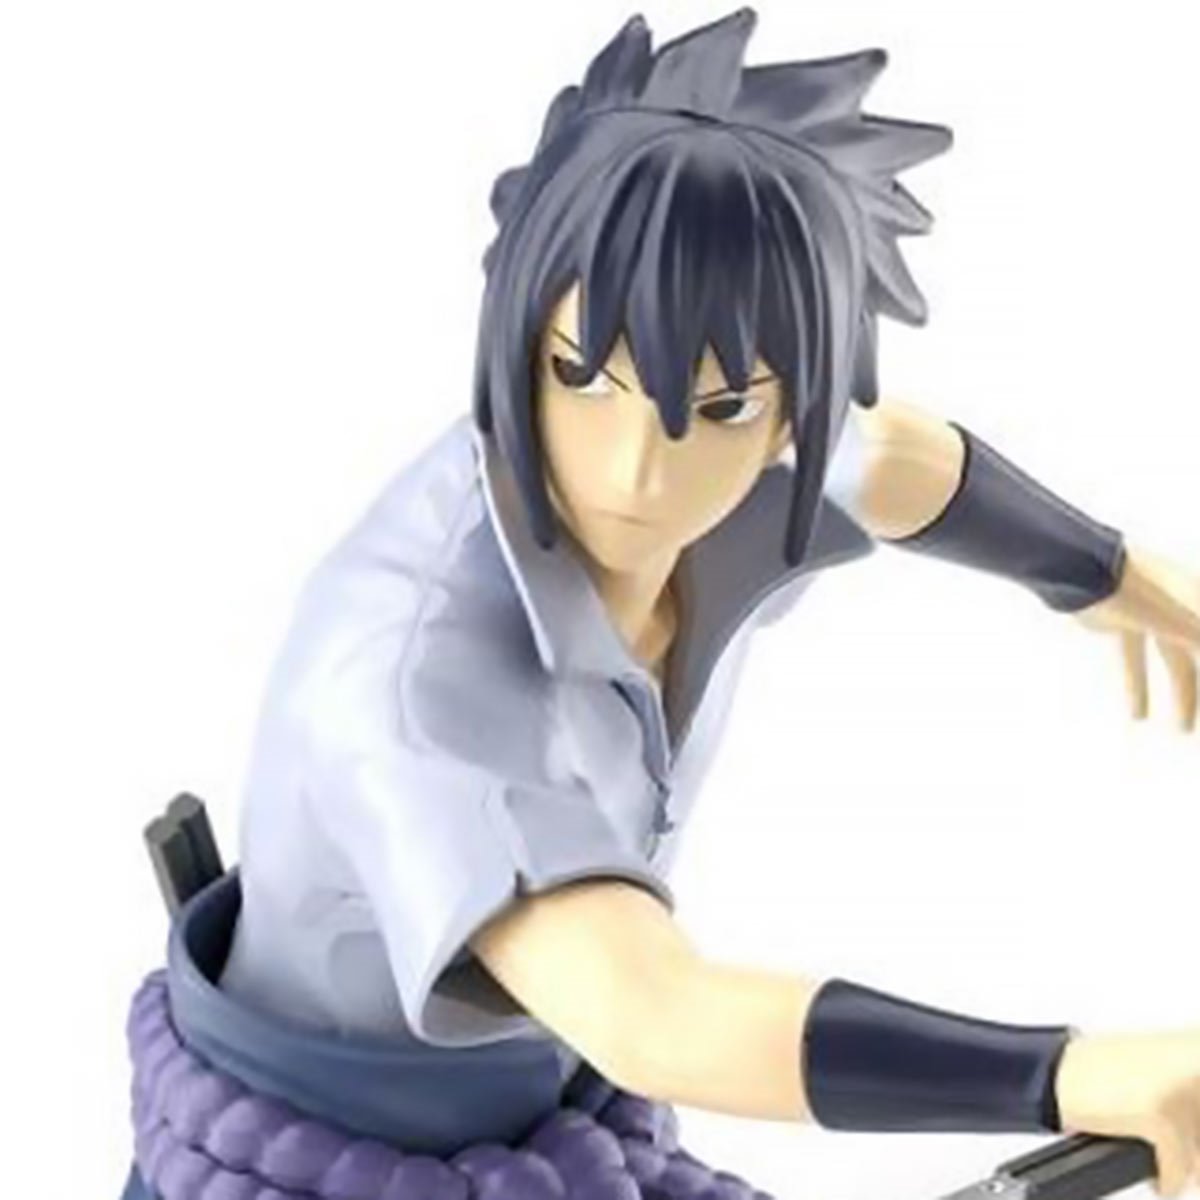 Bandai Hobby Gunpla Entry Grade Model Kit: Naruto Shippuden - Sasuke Uchiha